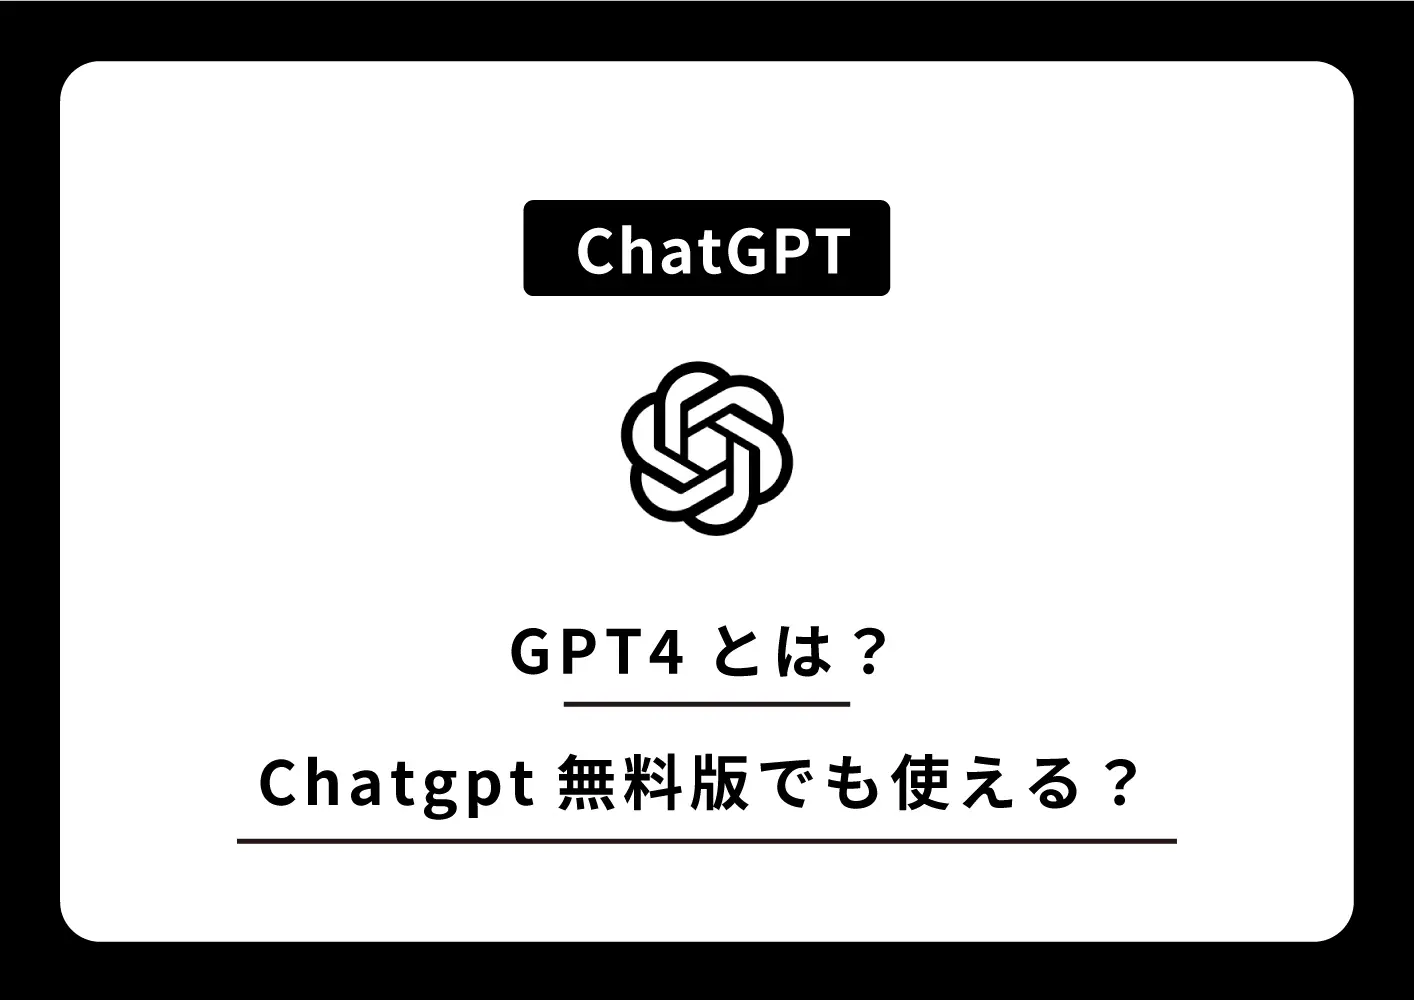 GPT-4oとは？,Chatgpt 4o